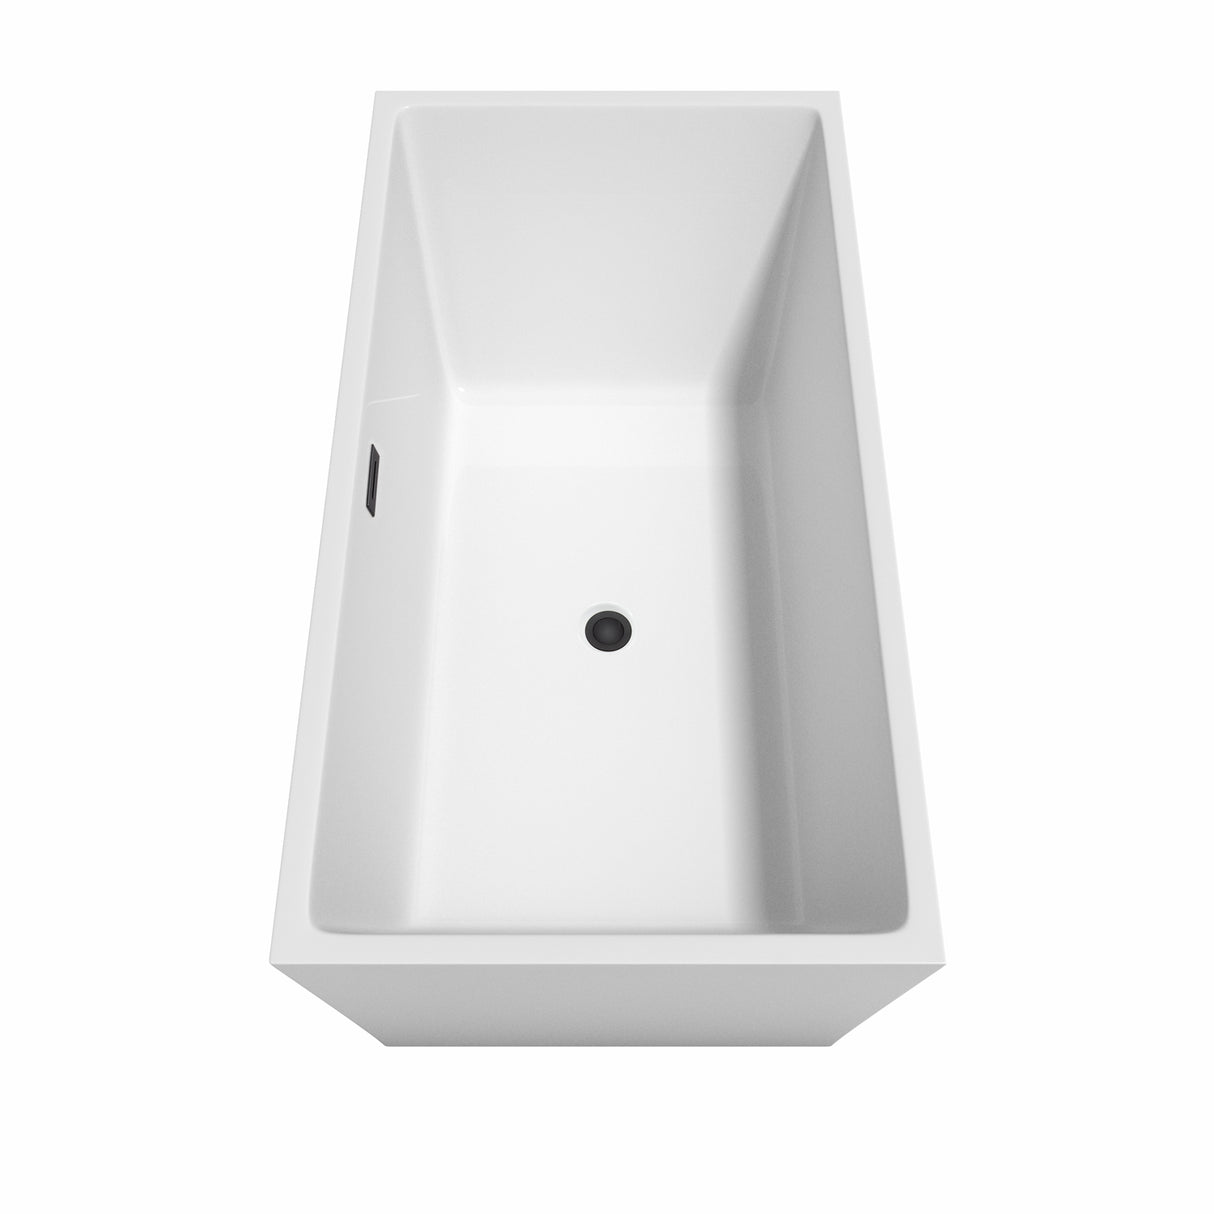 Sara 63 Inch Freestanding Bathtub in White with Matte Black Drain and Overflow Trim